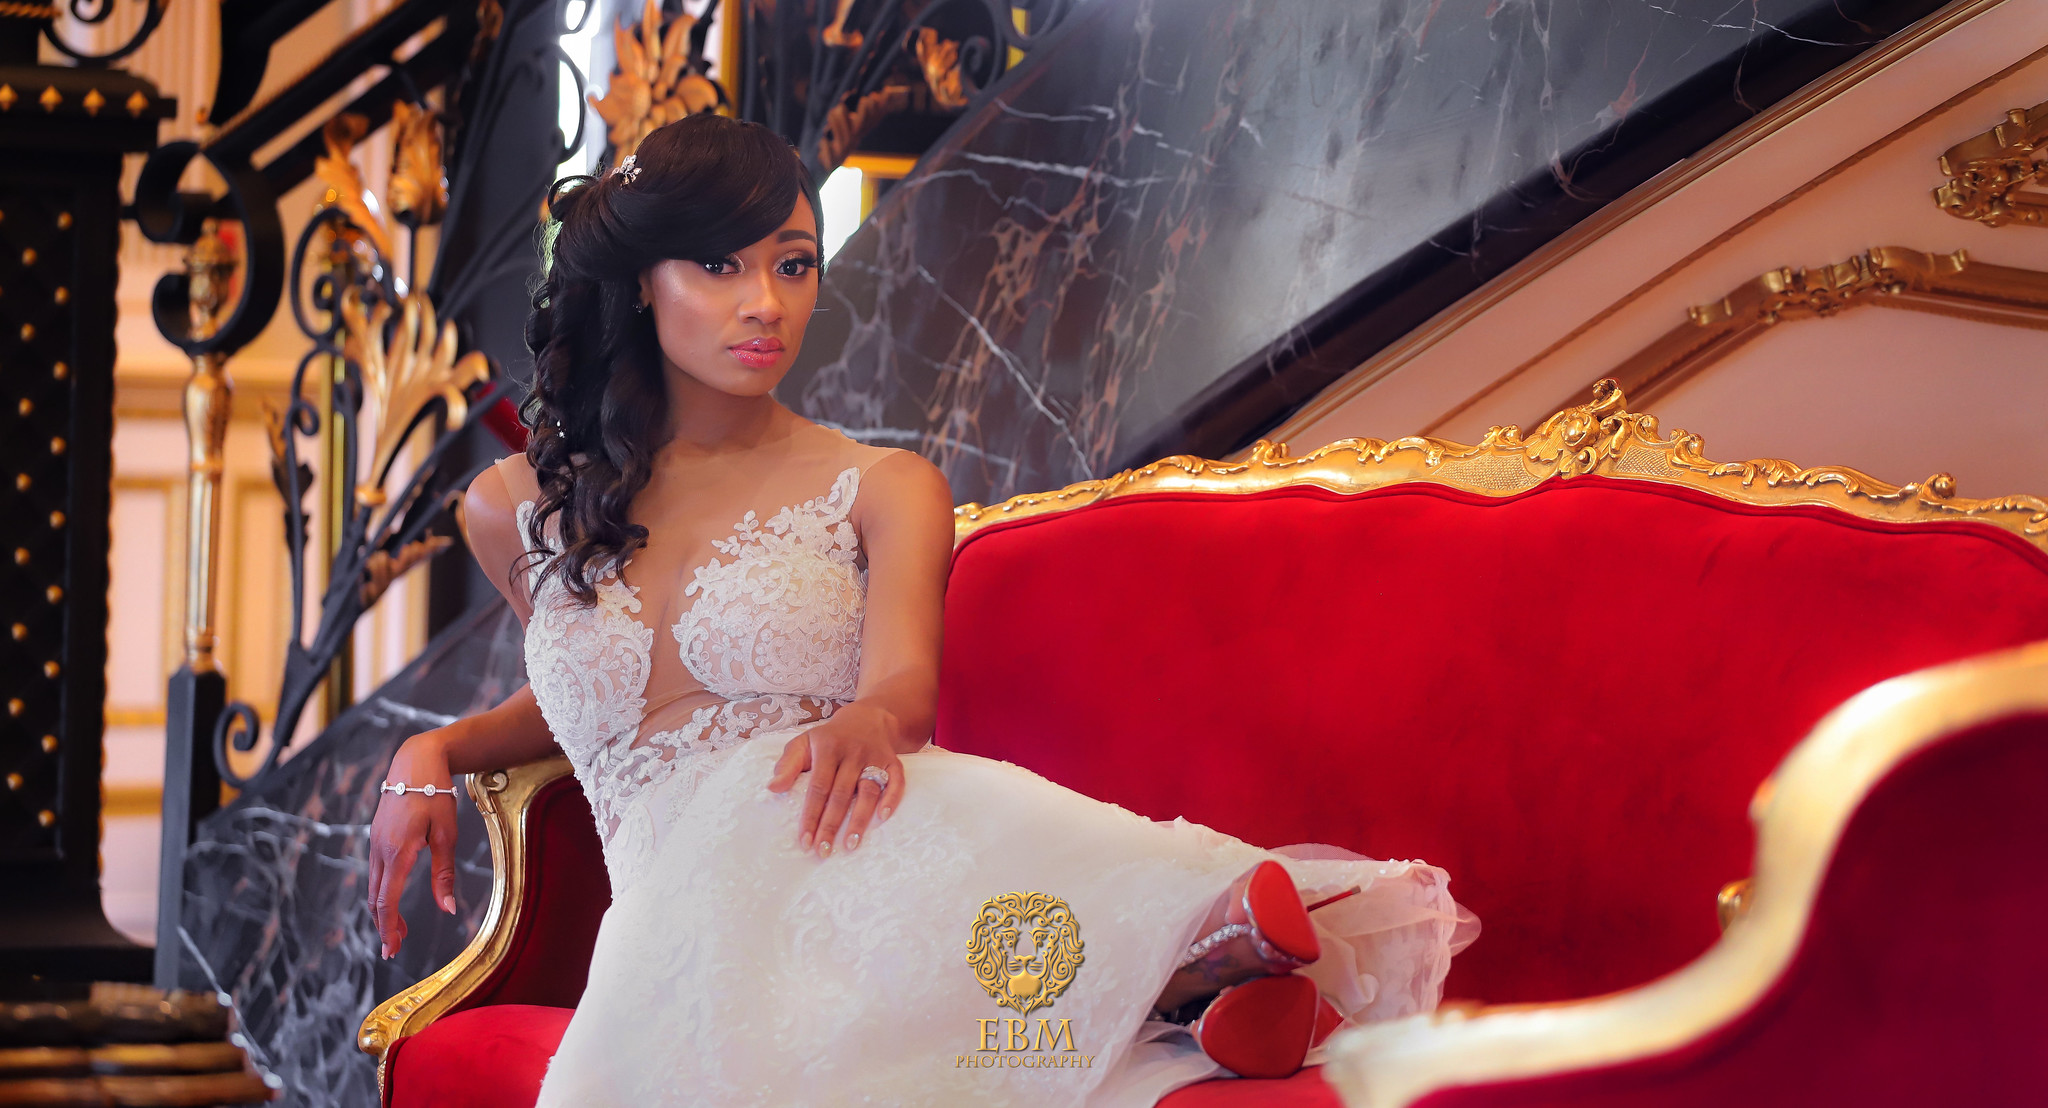 Legacy Castle Wedding Shoot by EBM Photography Studios